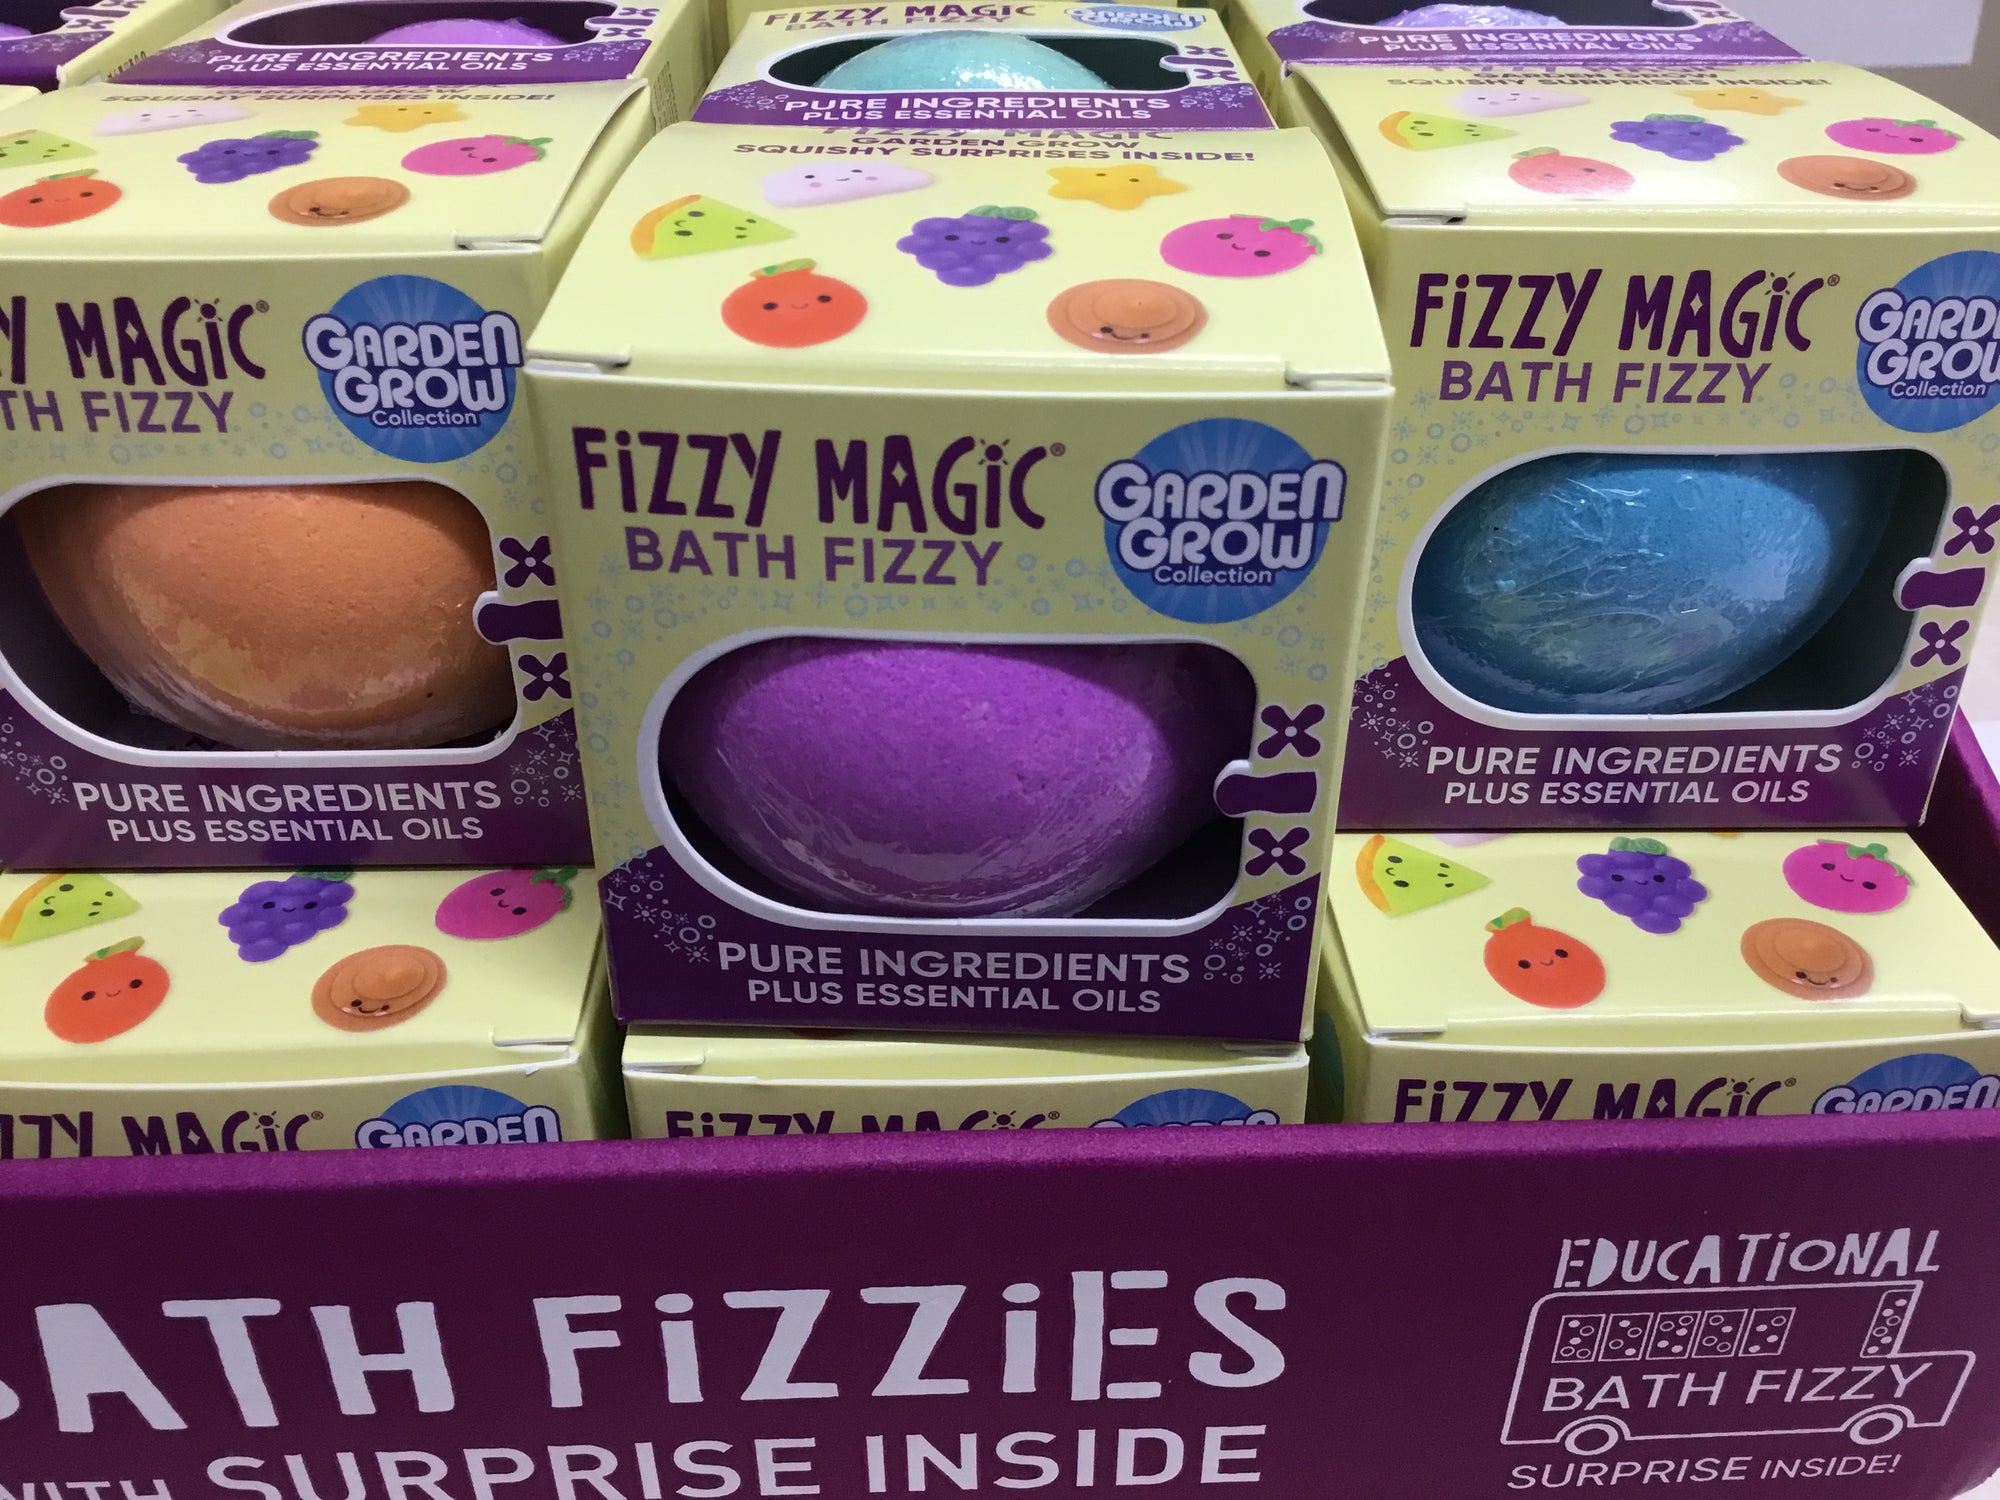 Fizzy Magic Garden Grow Surprise Bath Bomb